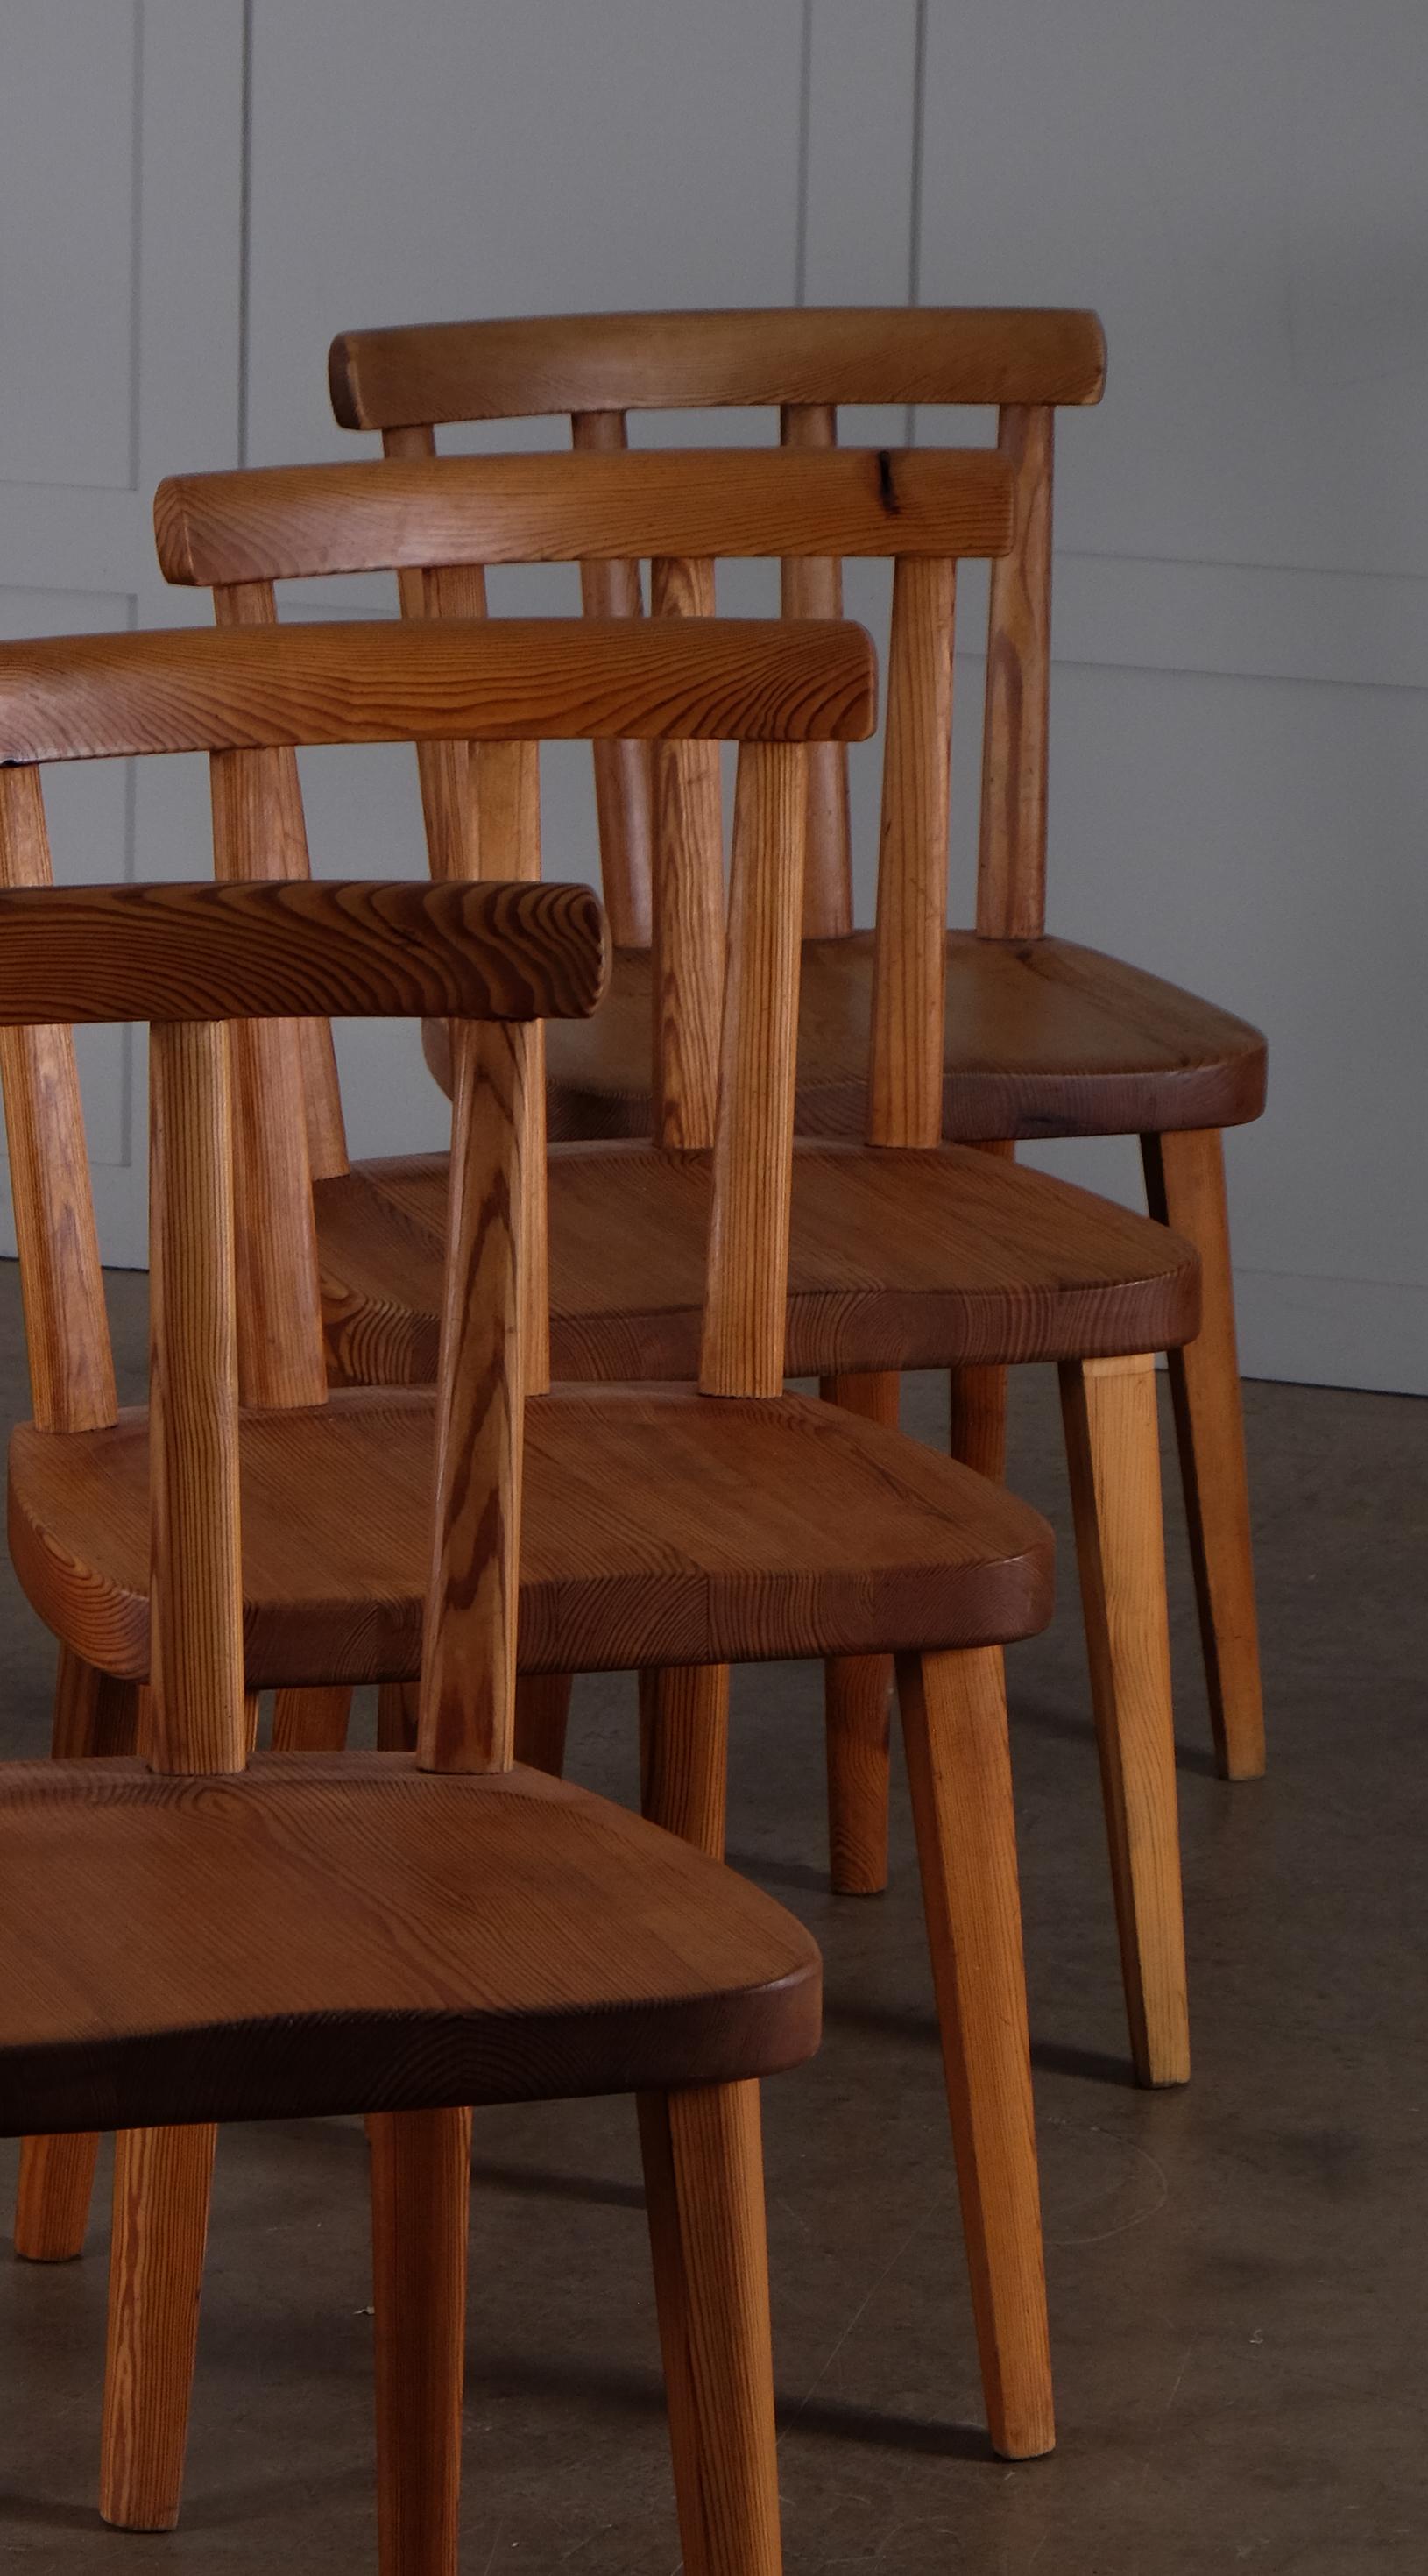 Rare set of 8 Utö/Uto pine chairs by Axel-Einar Hjorth, Sweden, circa 1930s.
Produced by Nordiska Kompaniet.
  